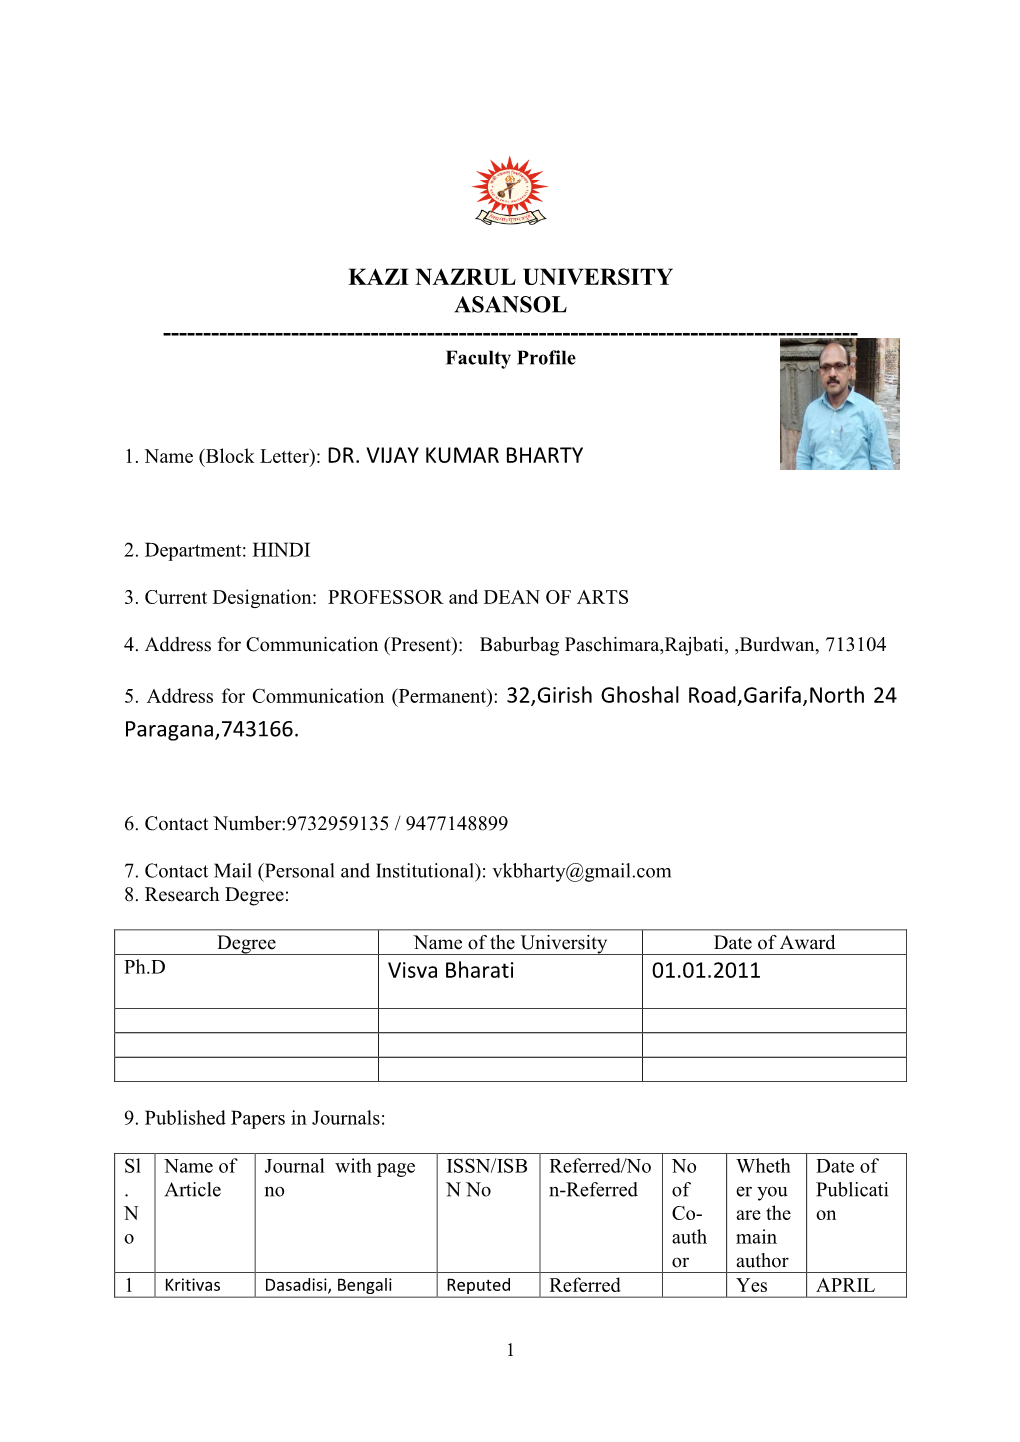 KAZI NAZRUL UNIVERSITY ASANSOL ------Faculty Profile